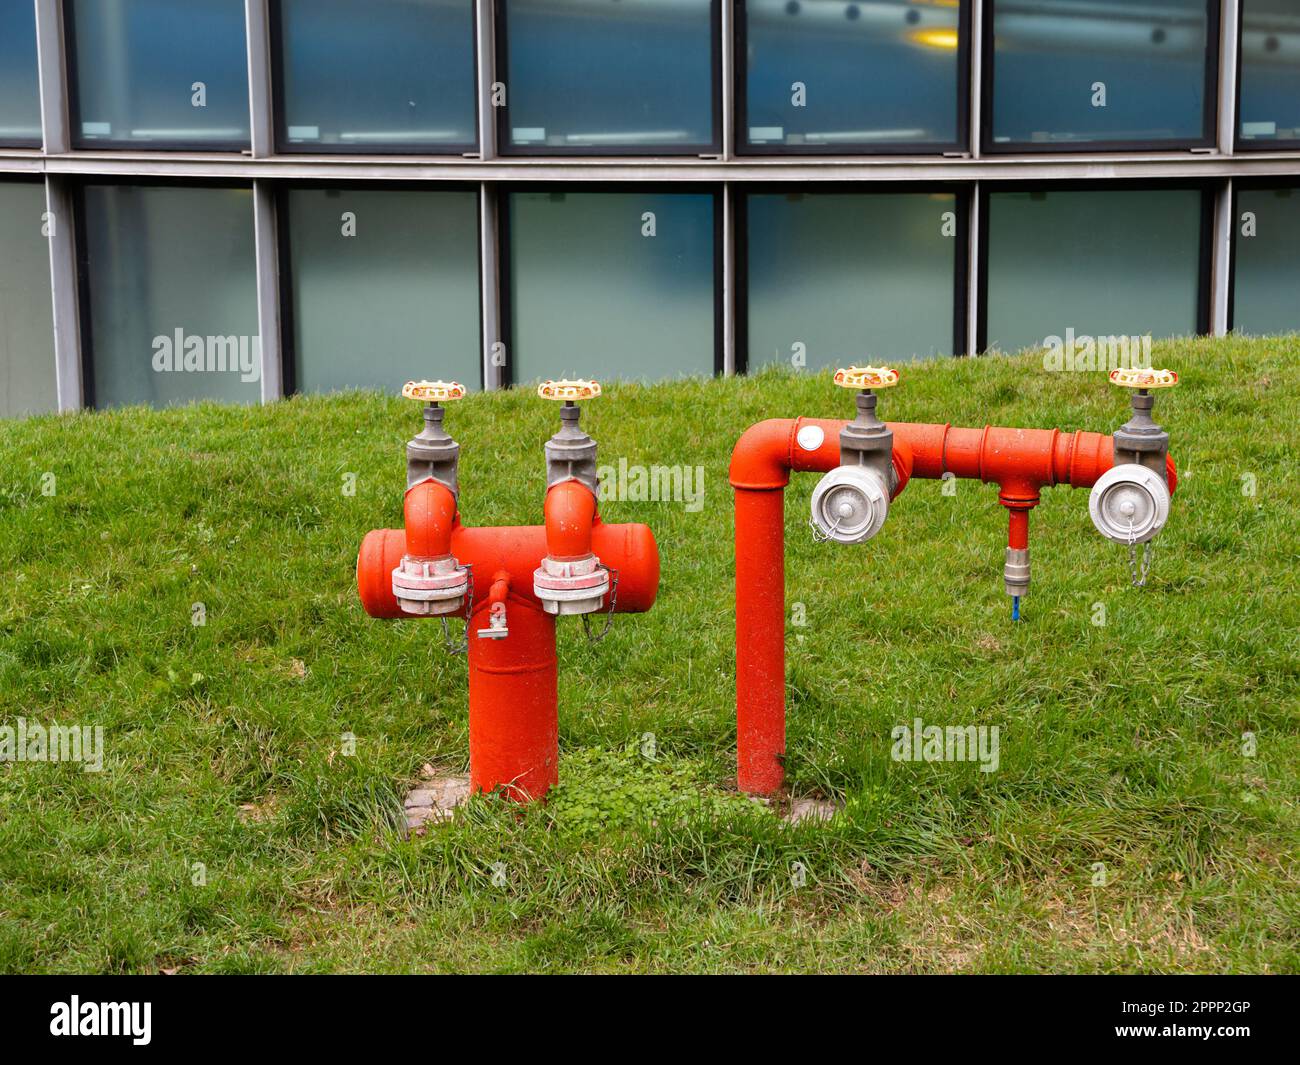 Outdoor water installation in Frankfurt for extinguishing fires Stock Photo